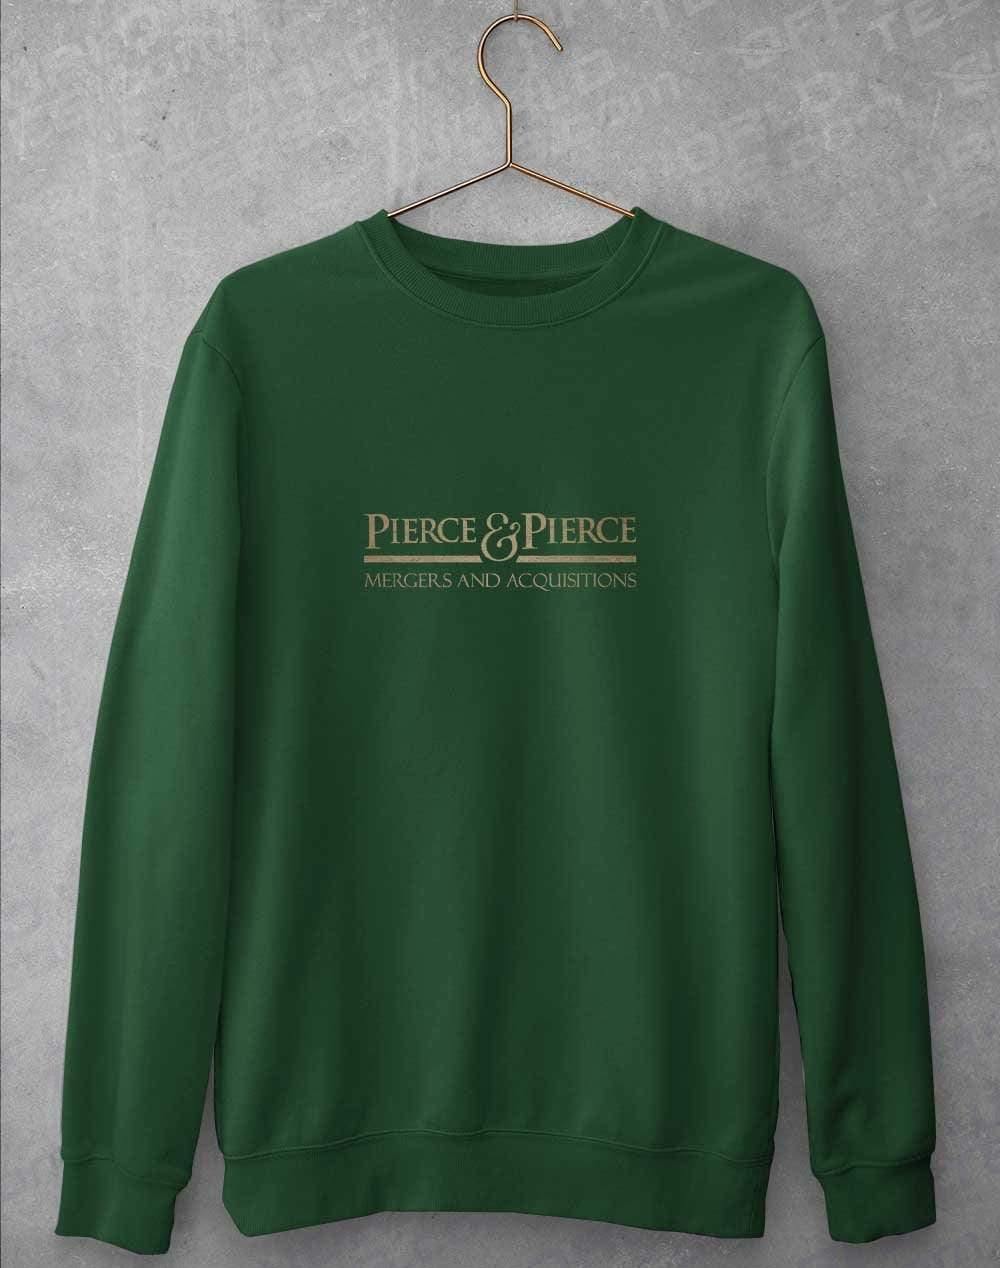 Pierce and Pierce Sweatshirt S / Bottle Green  - Off World Tees